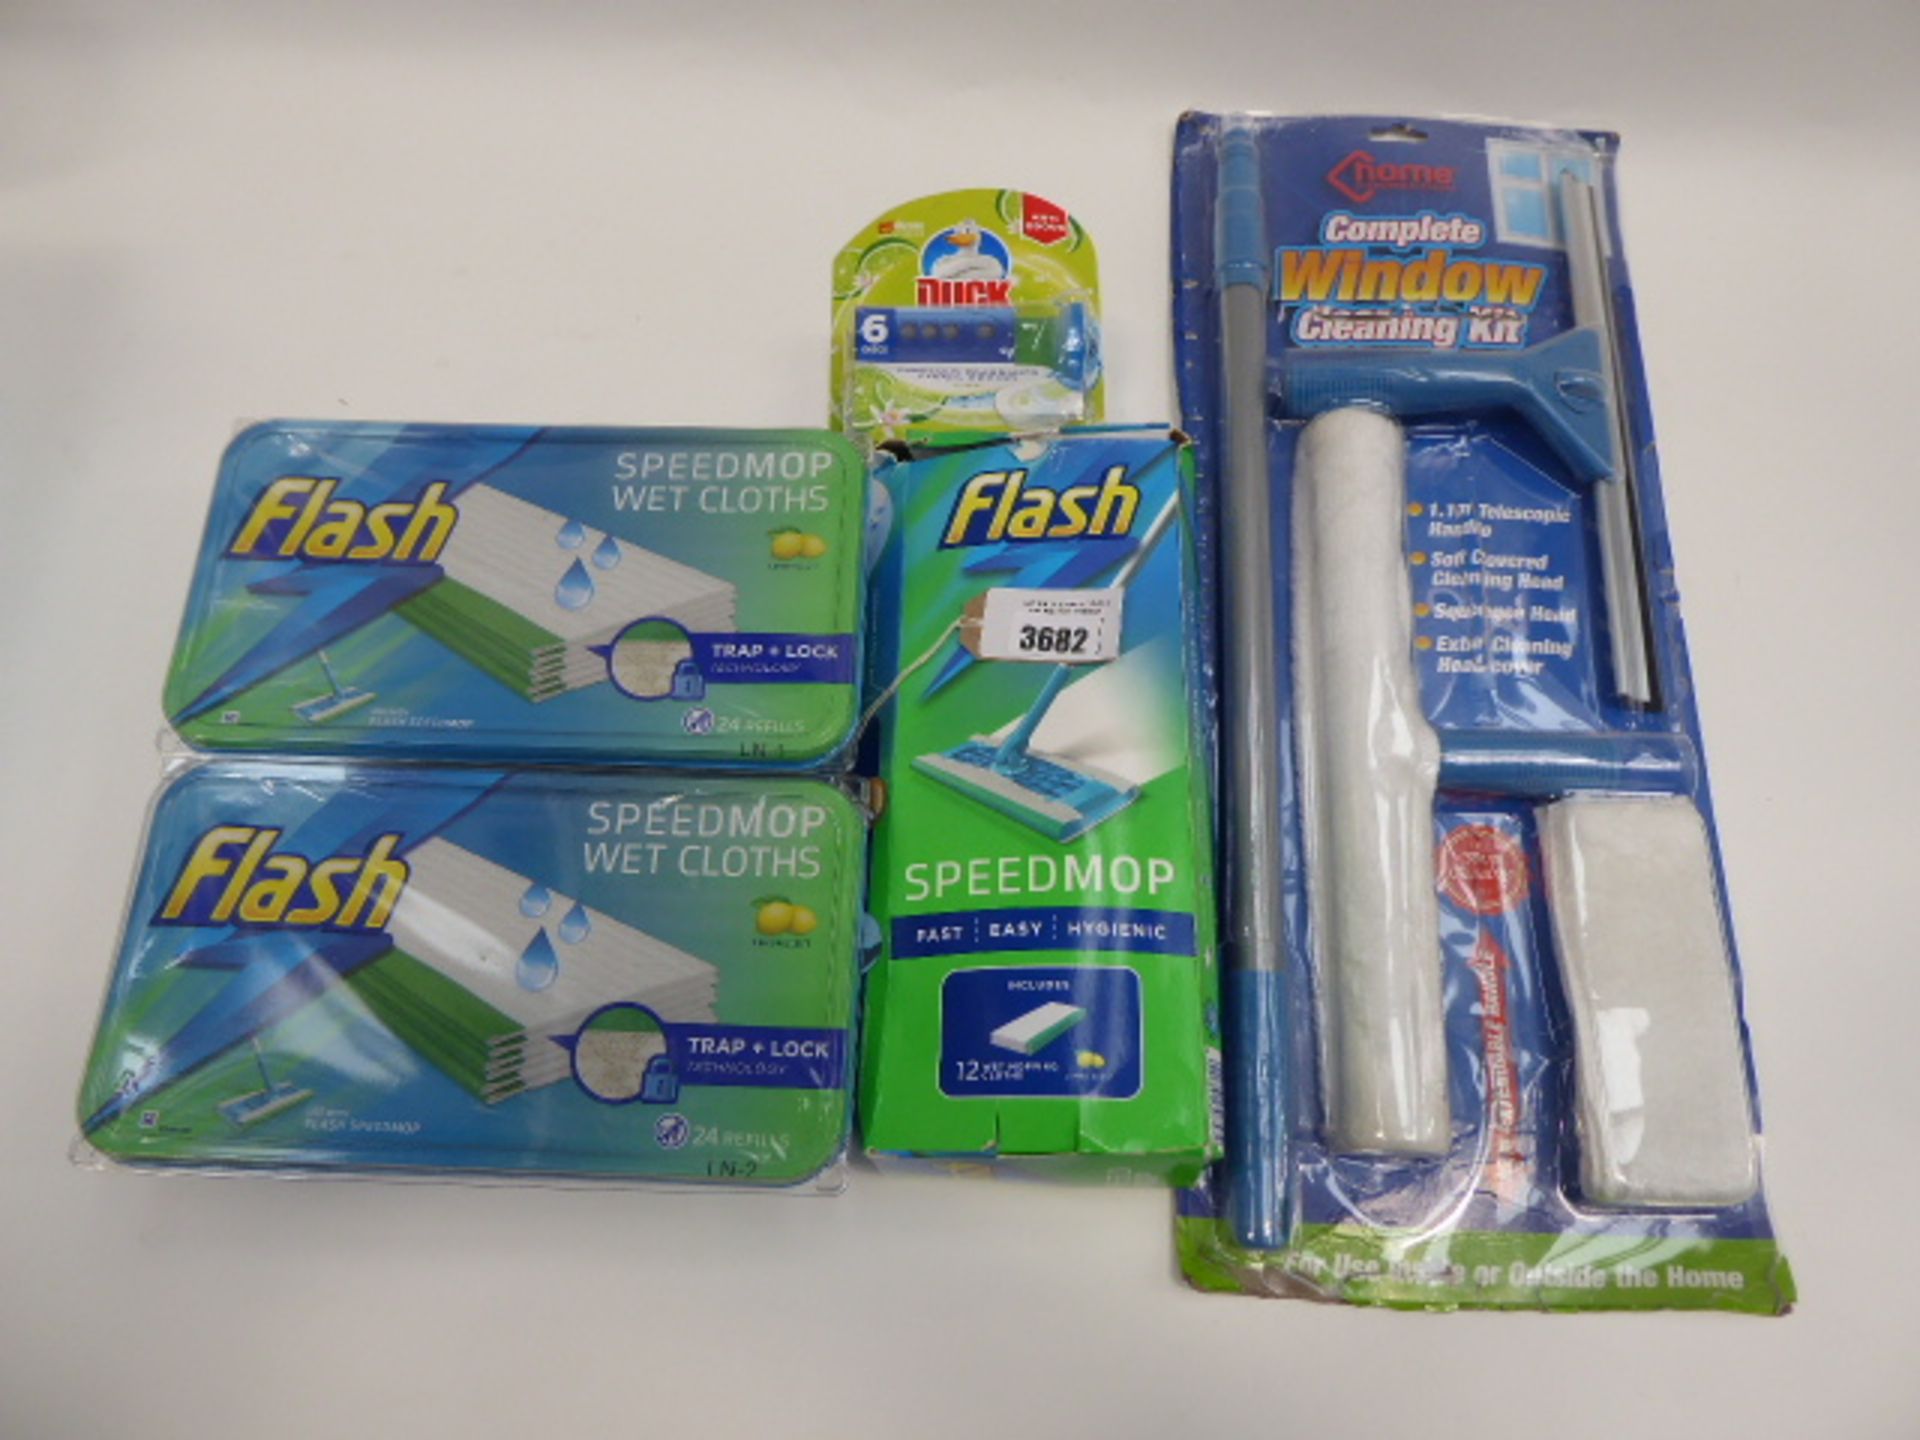 2x packs of Flash SpeedMop wet cloths, Flash SpeedMop, Complete Window Cleaning Kit and Duck Fresh